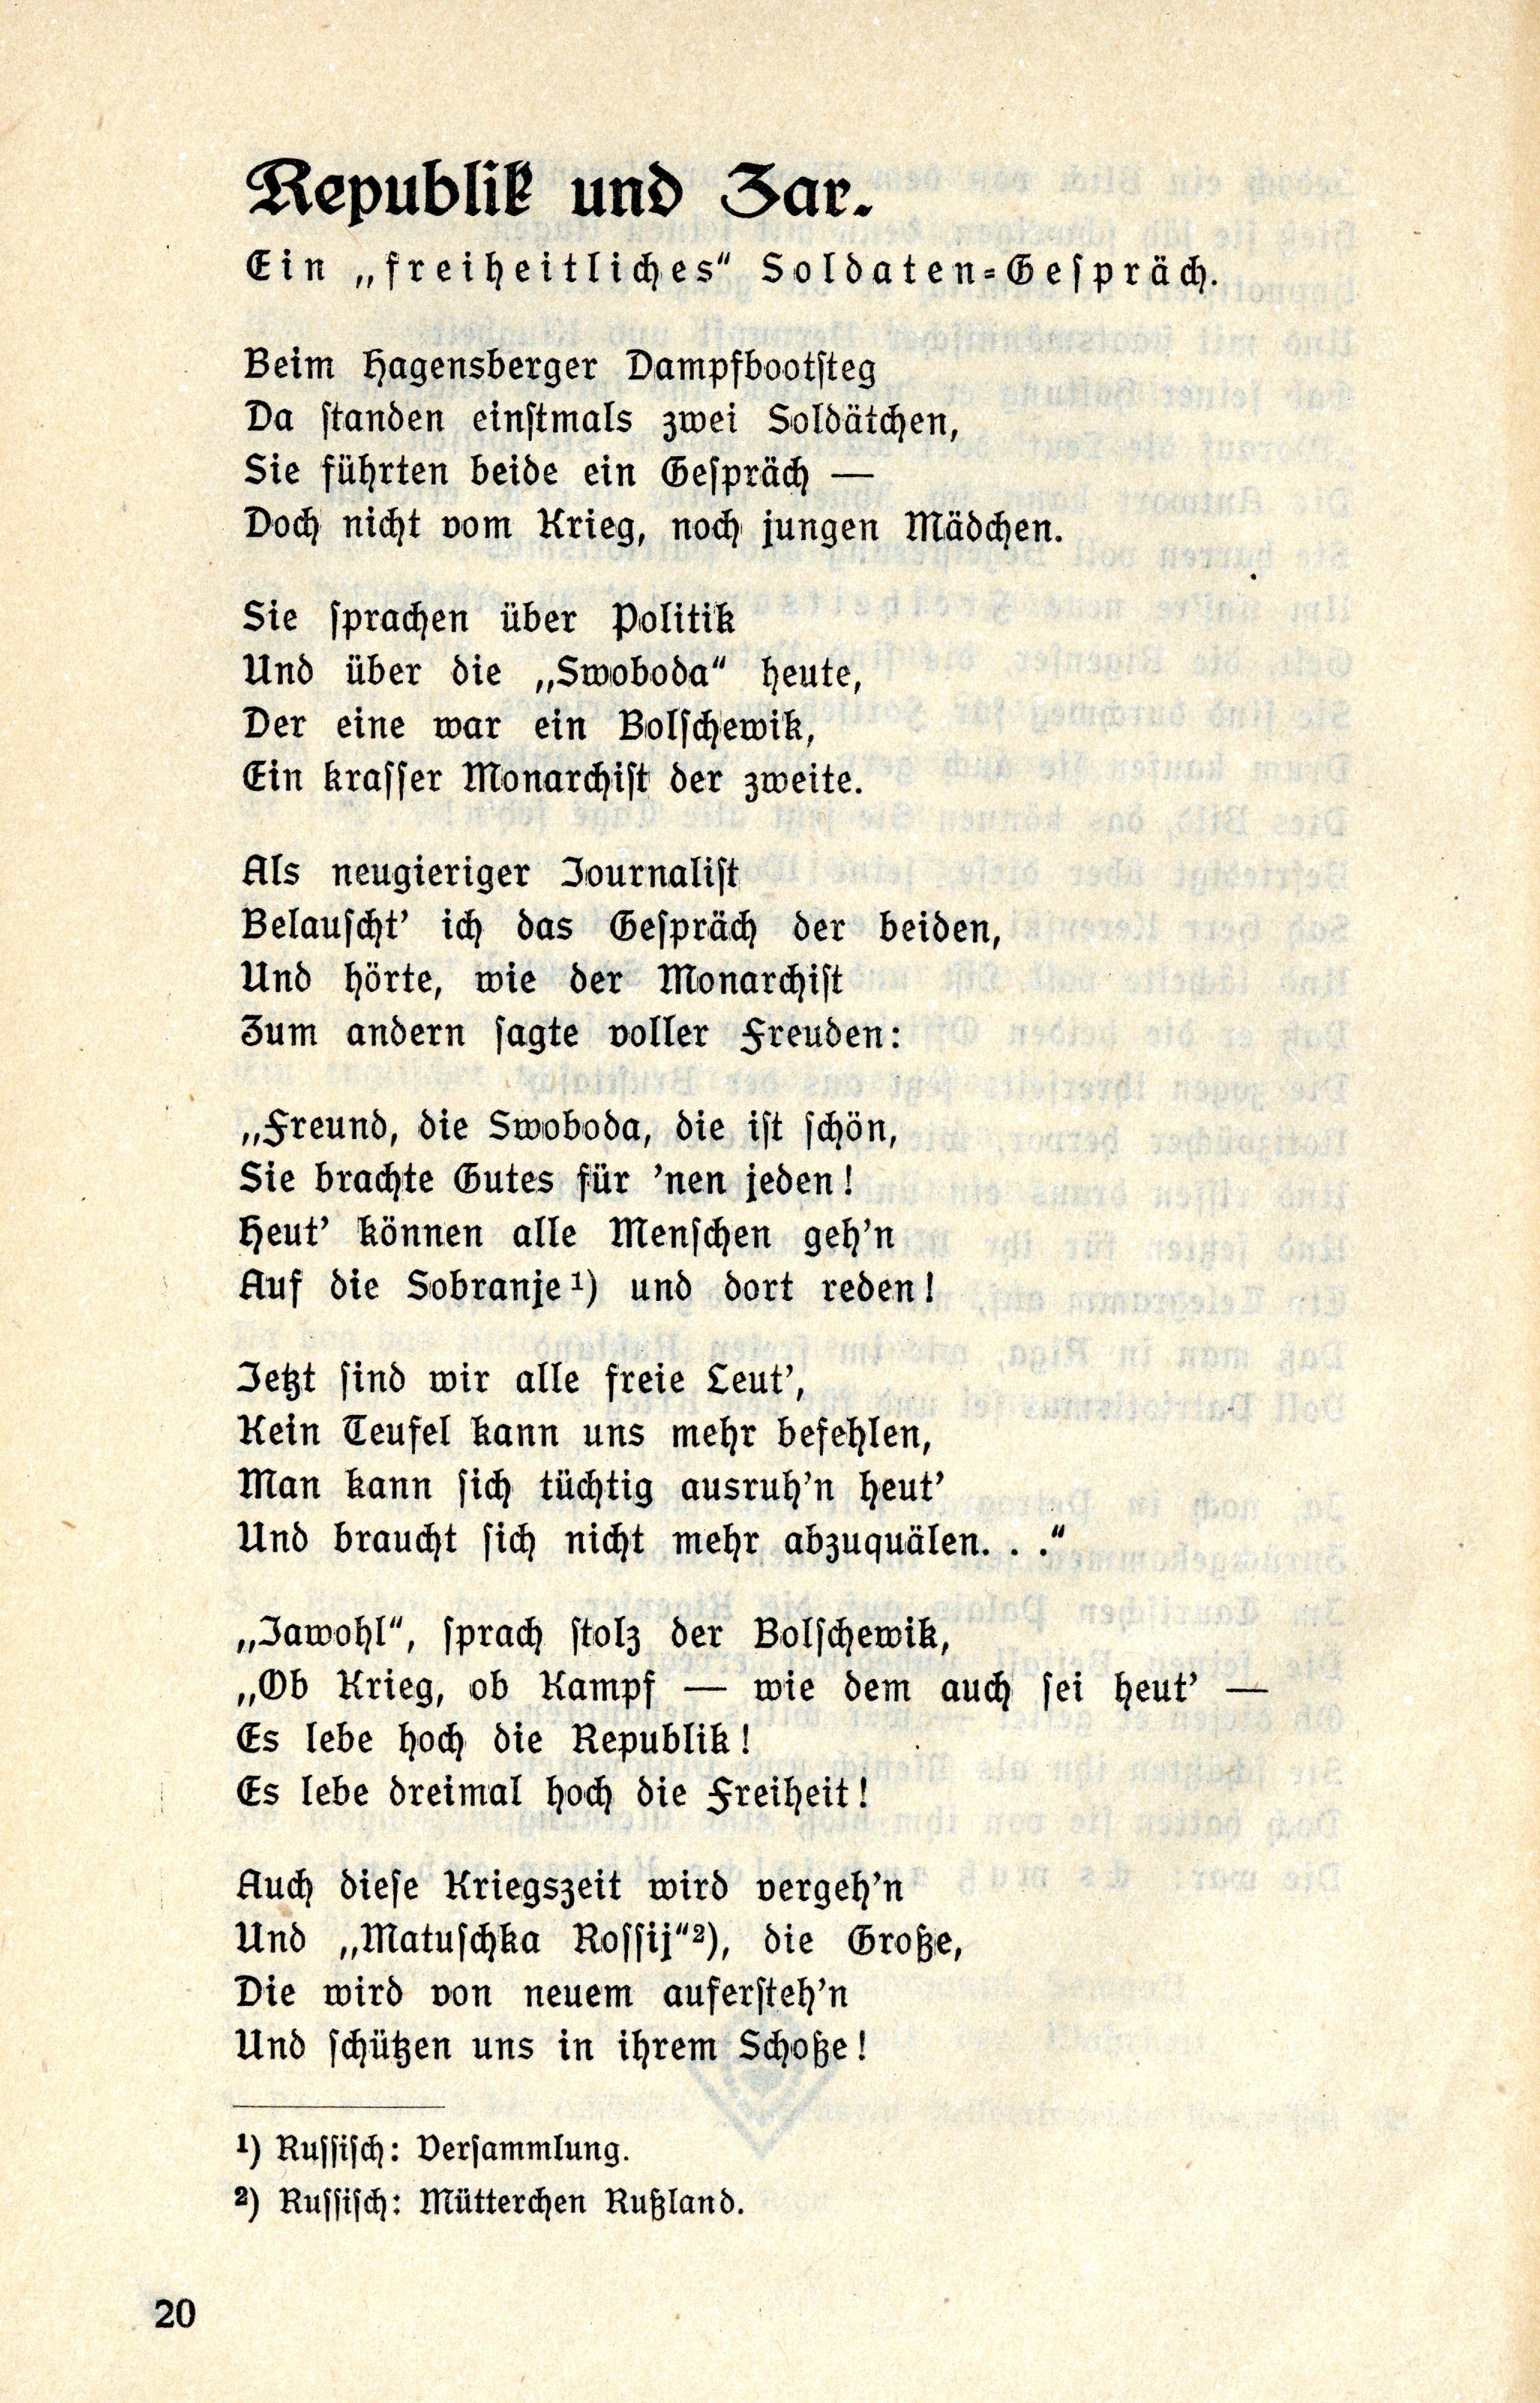 Der Balte im Maulkorb (1917) | 21. (20) Haupttext